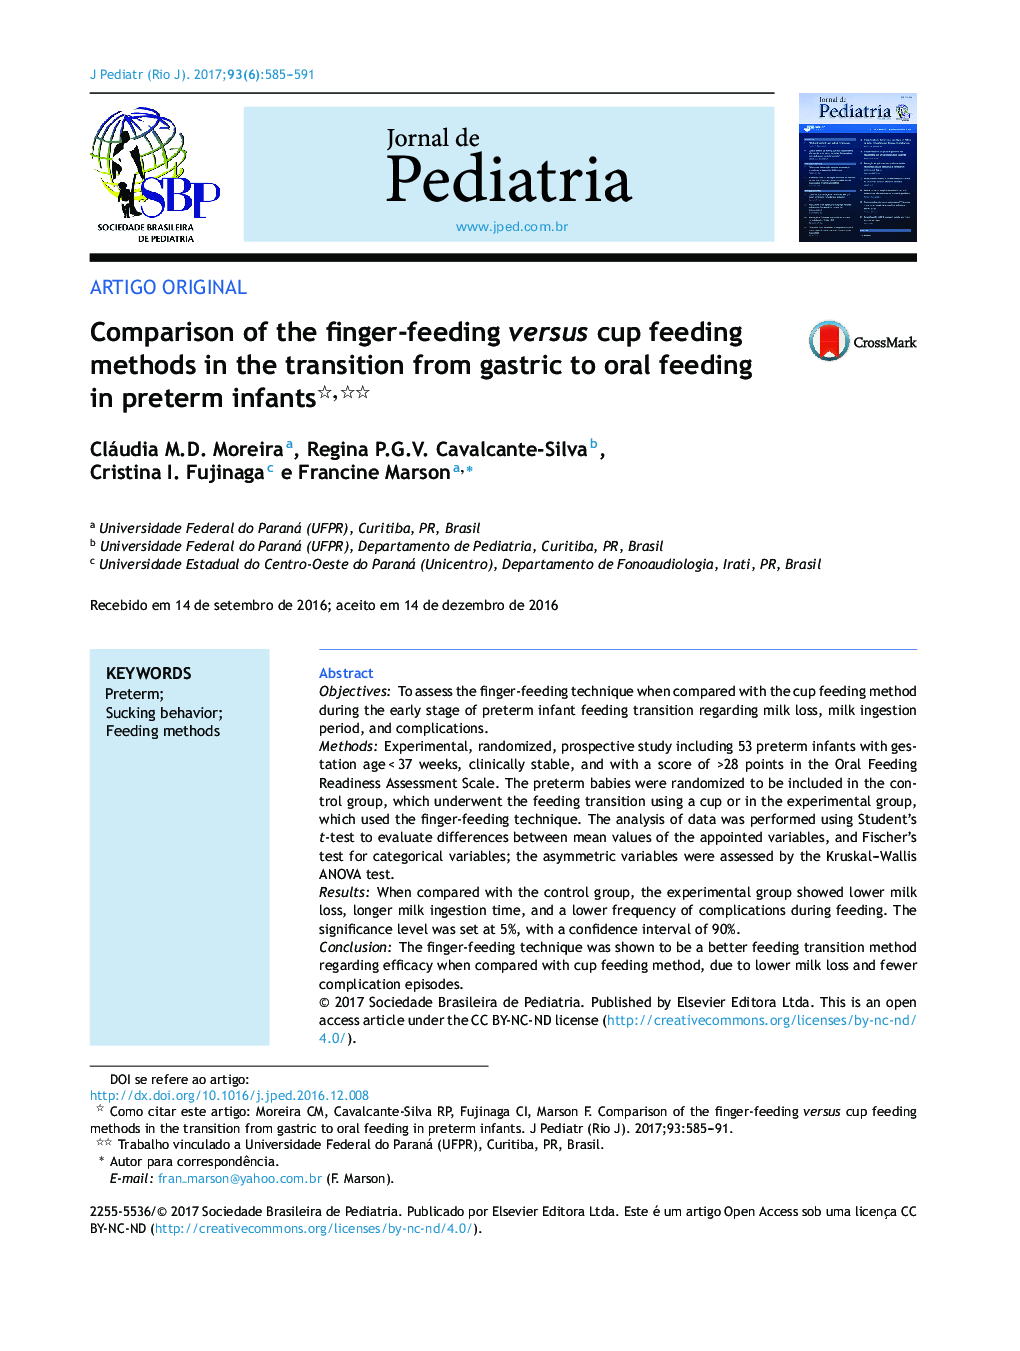 Comparison of the fingerâfeeding versus cup feeding methods in the transition from gastric to oral feeding in preterm infants